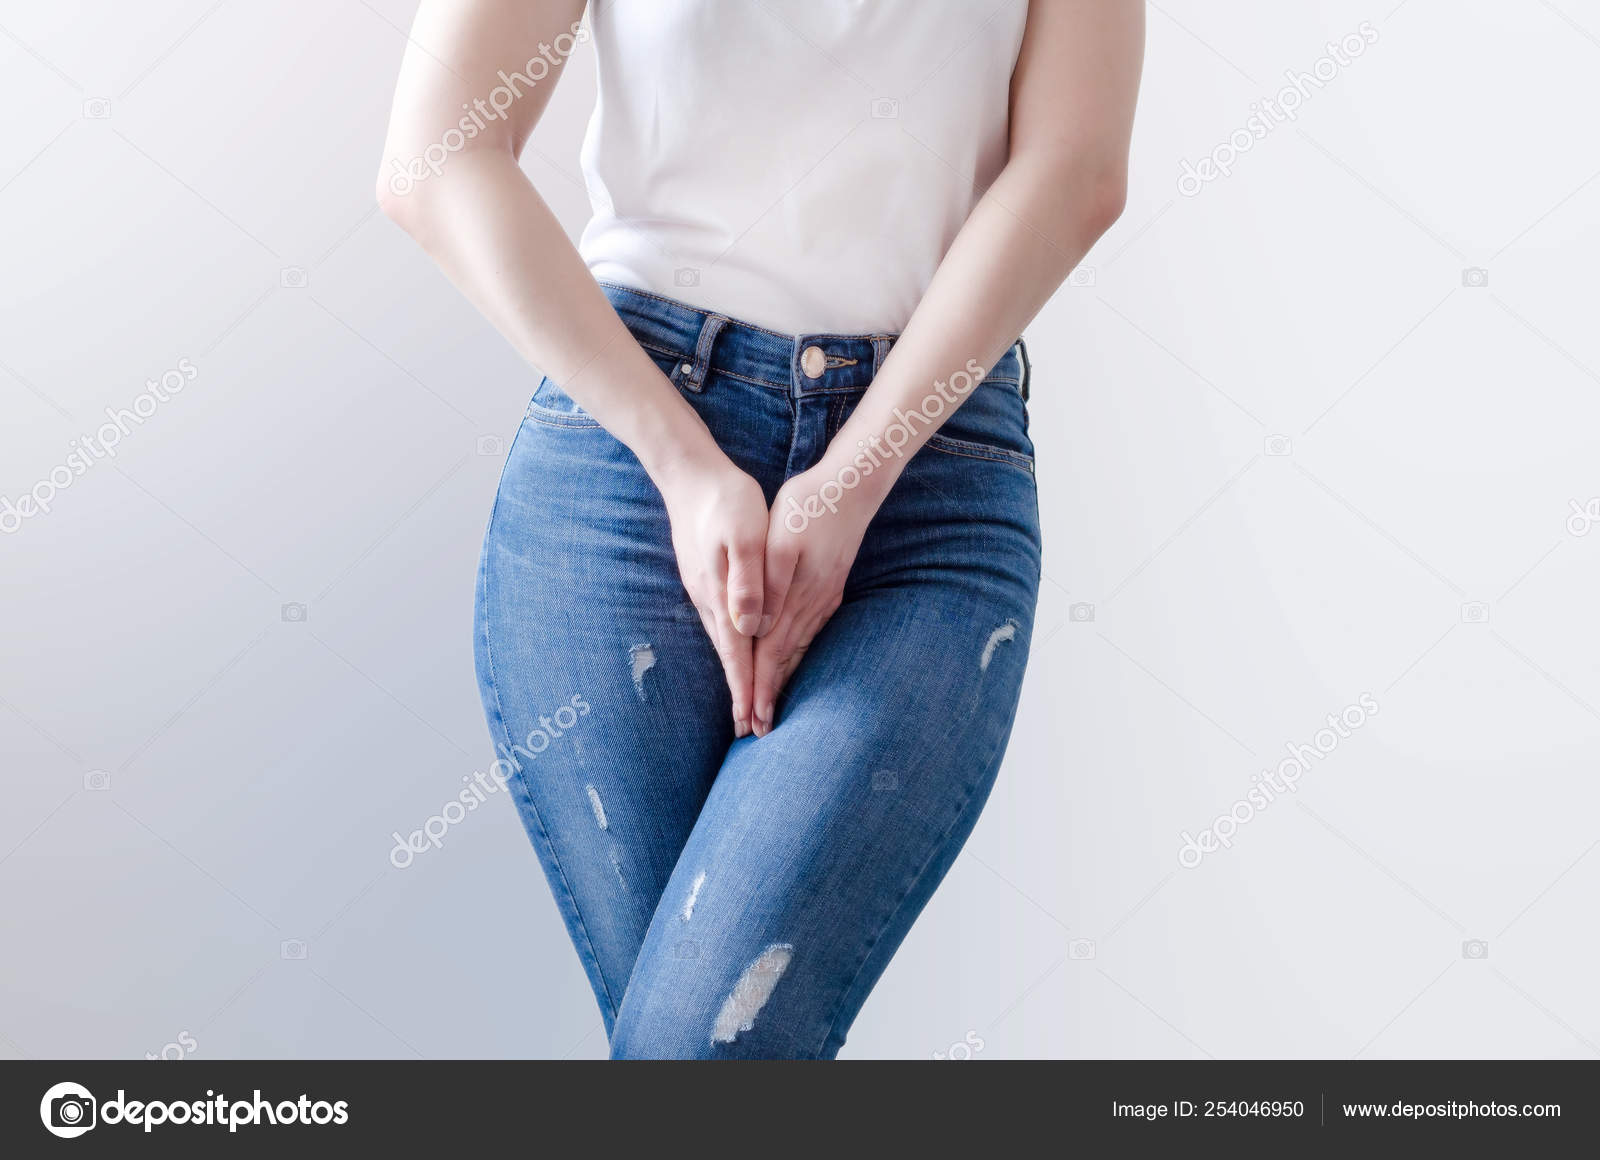 Woman between legs